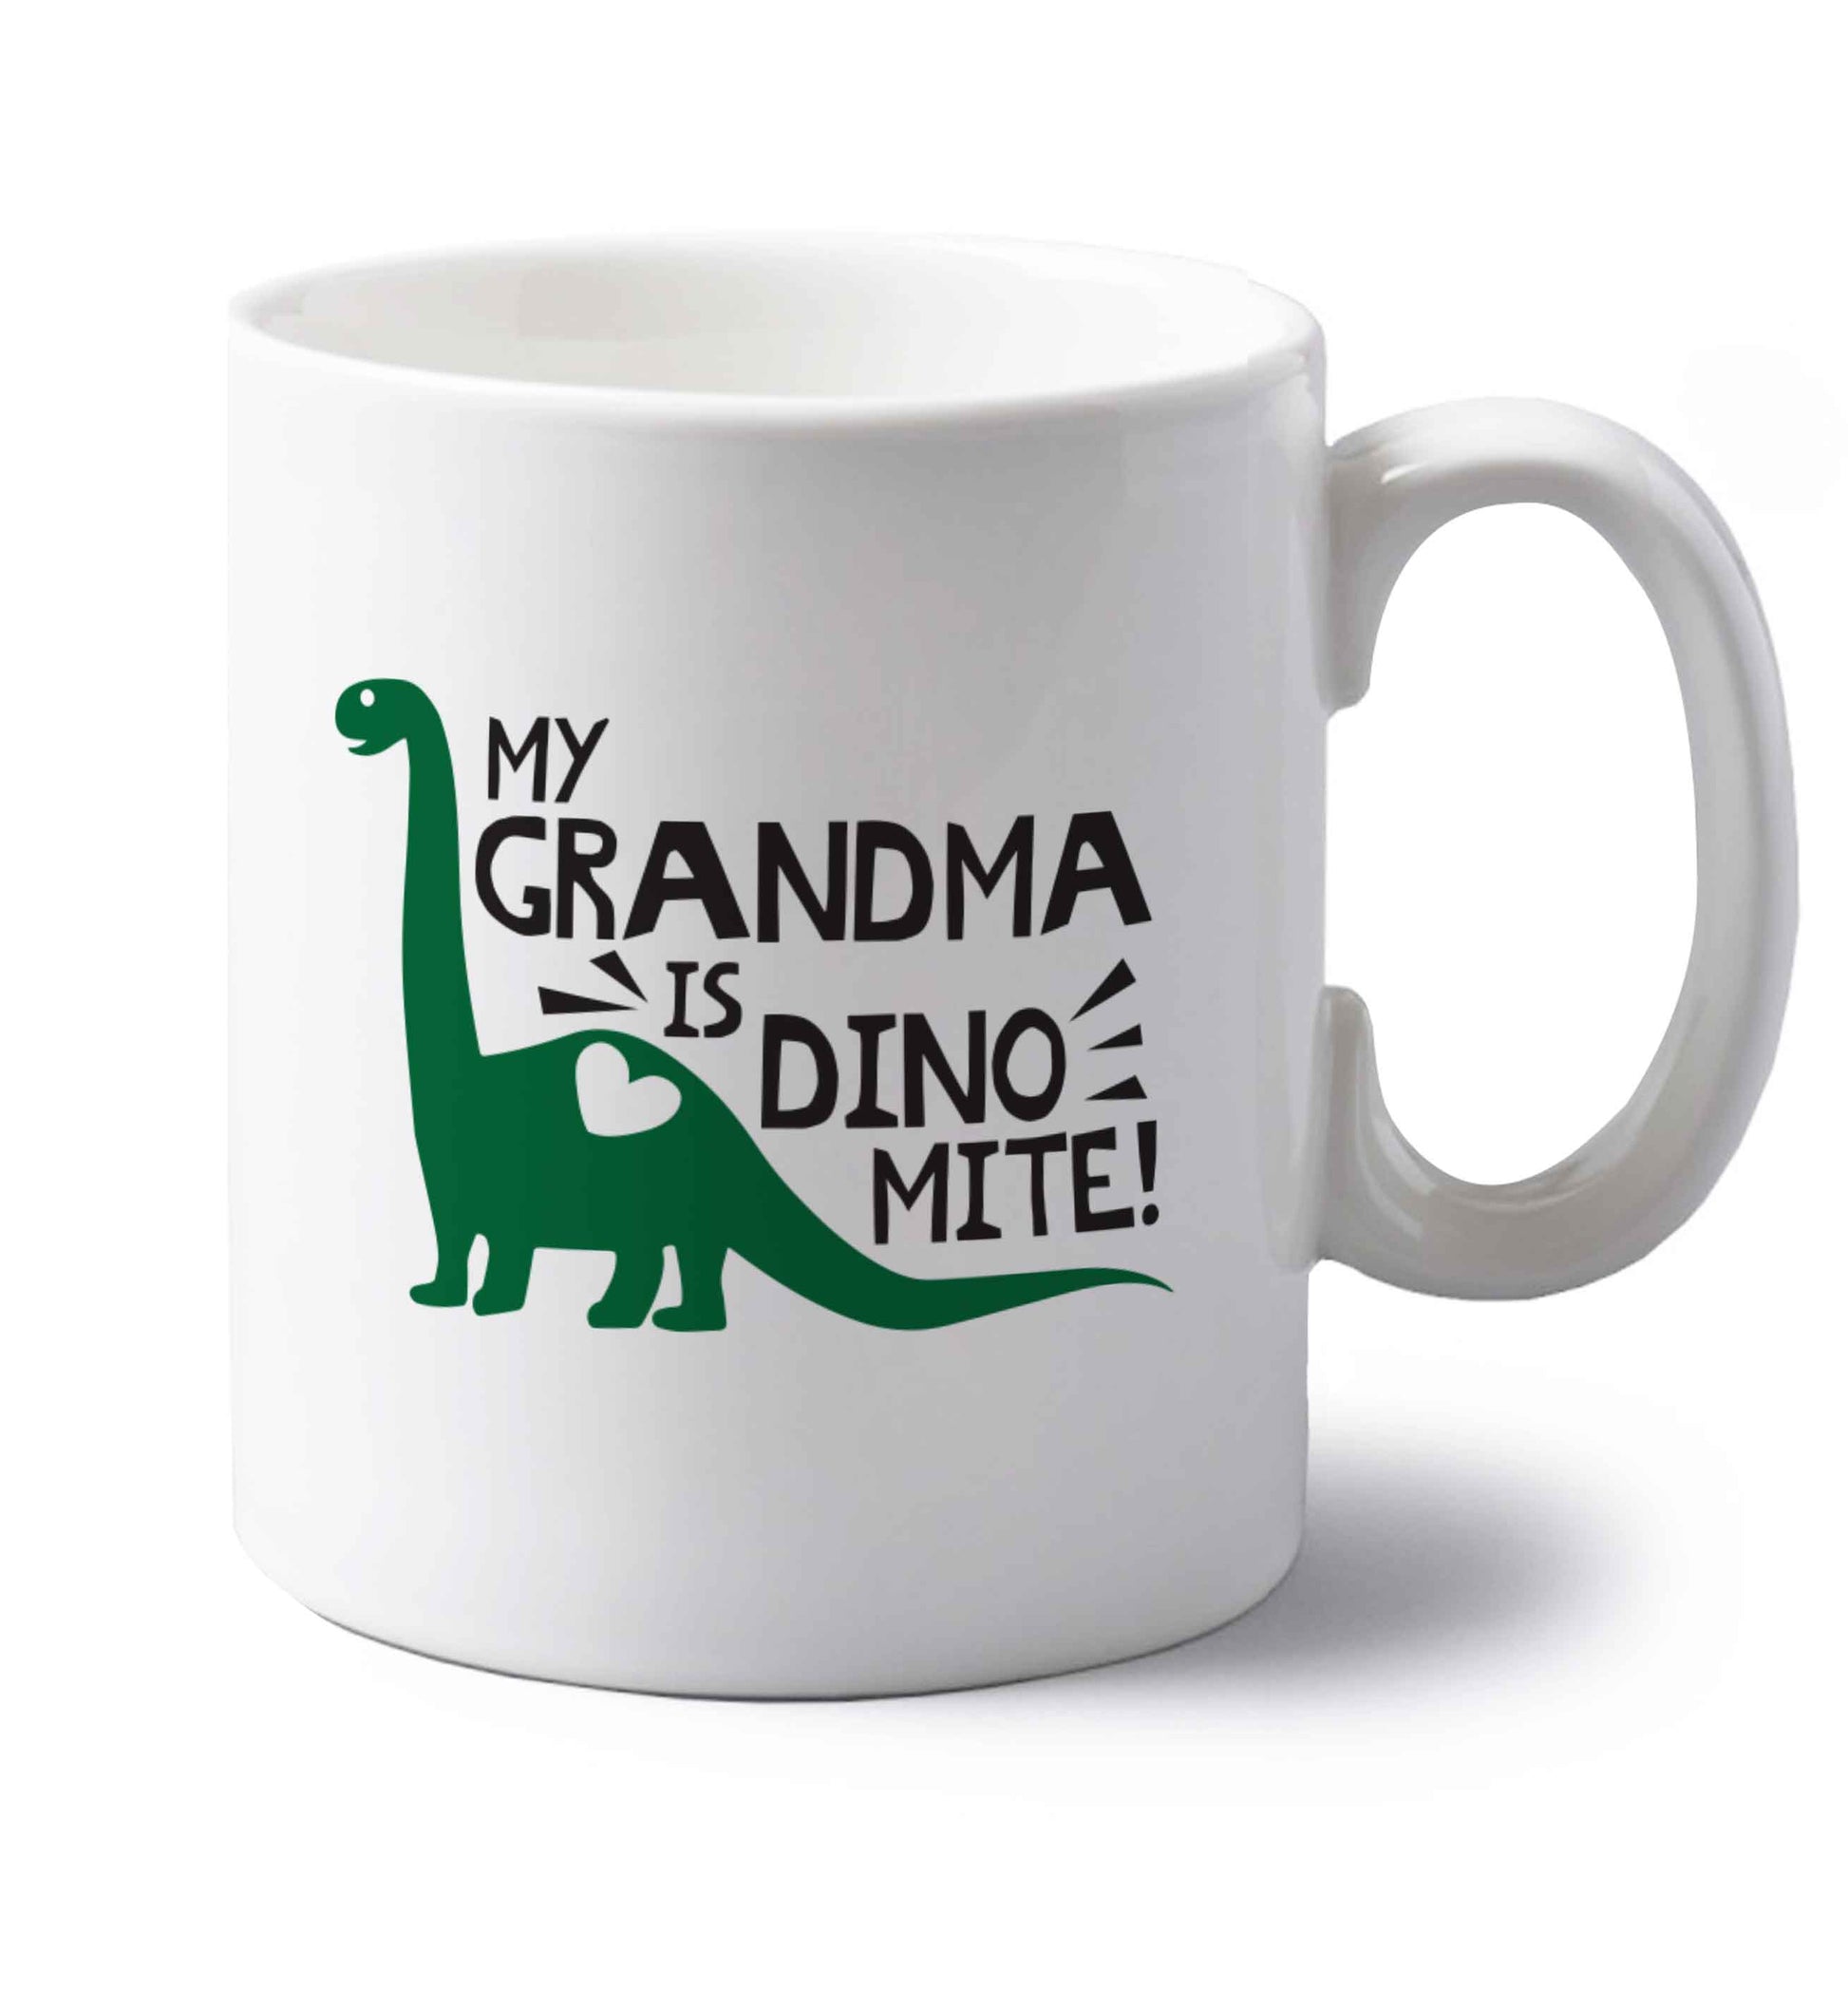 My grandma is dinomite! left handed white ceramic mug 